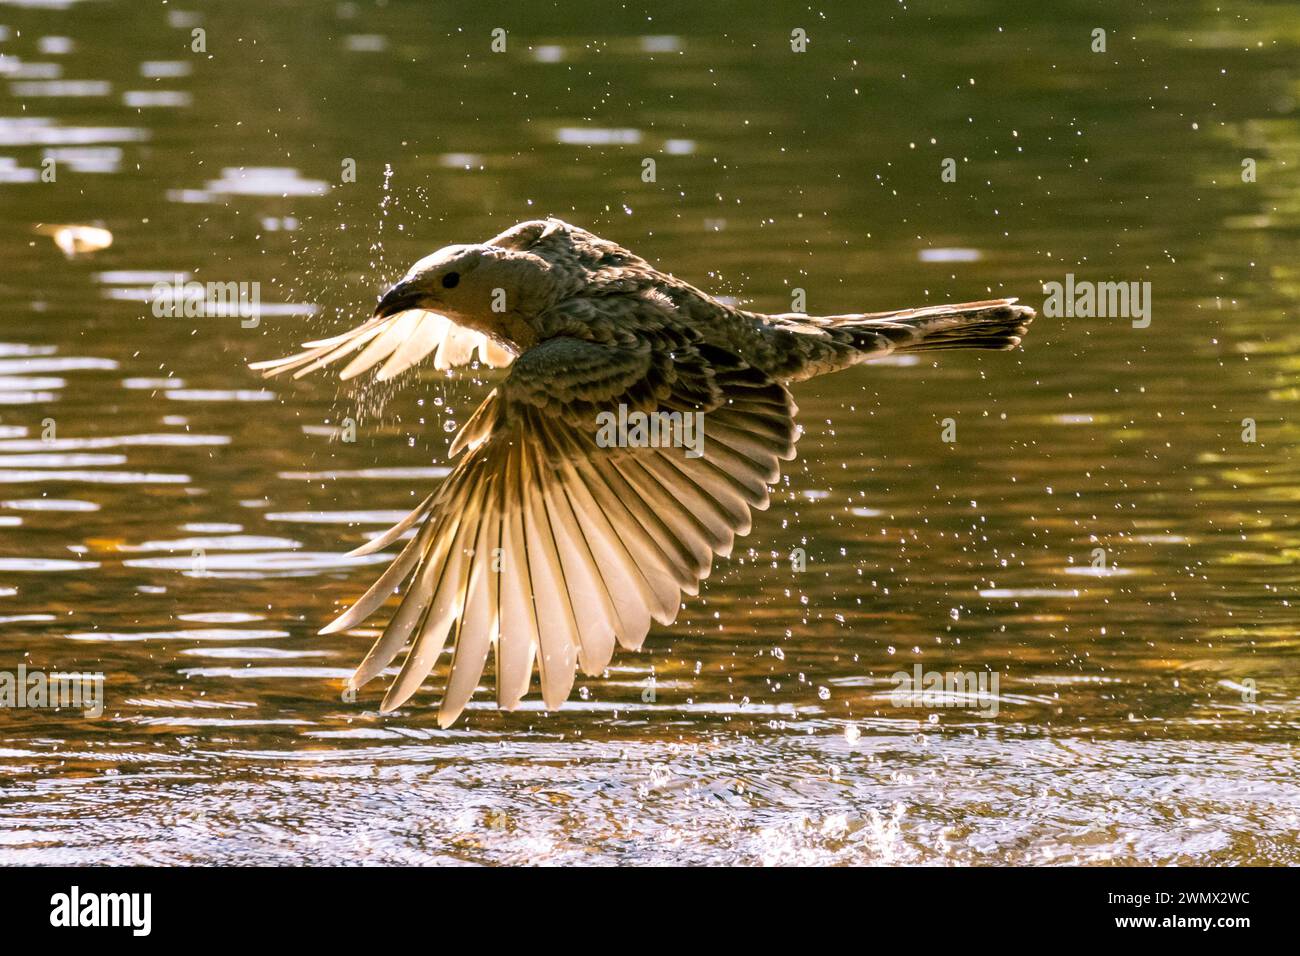 Great bowerbird in flight over water, Australia Stock Photo